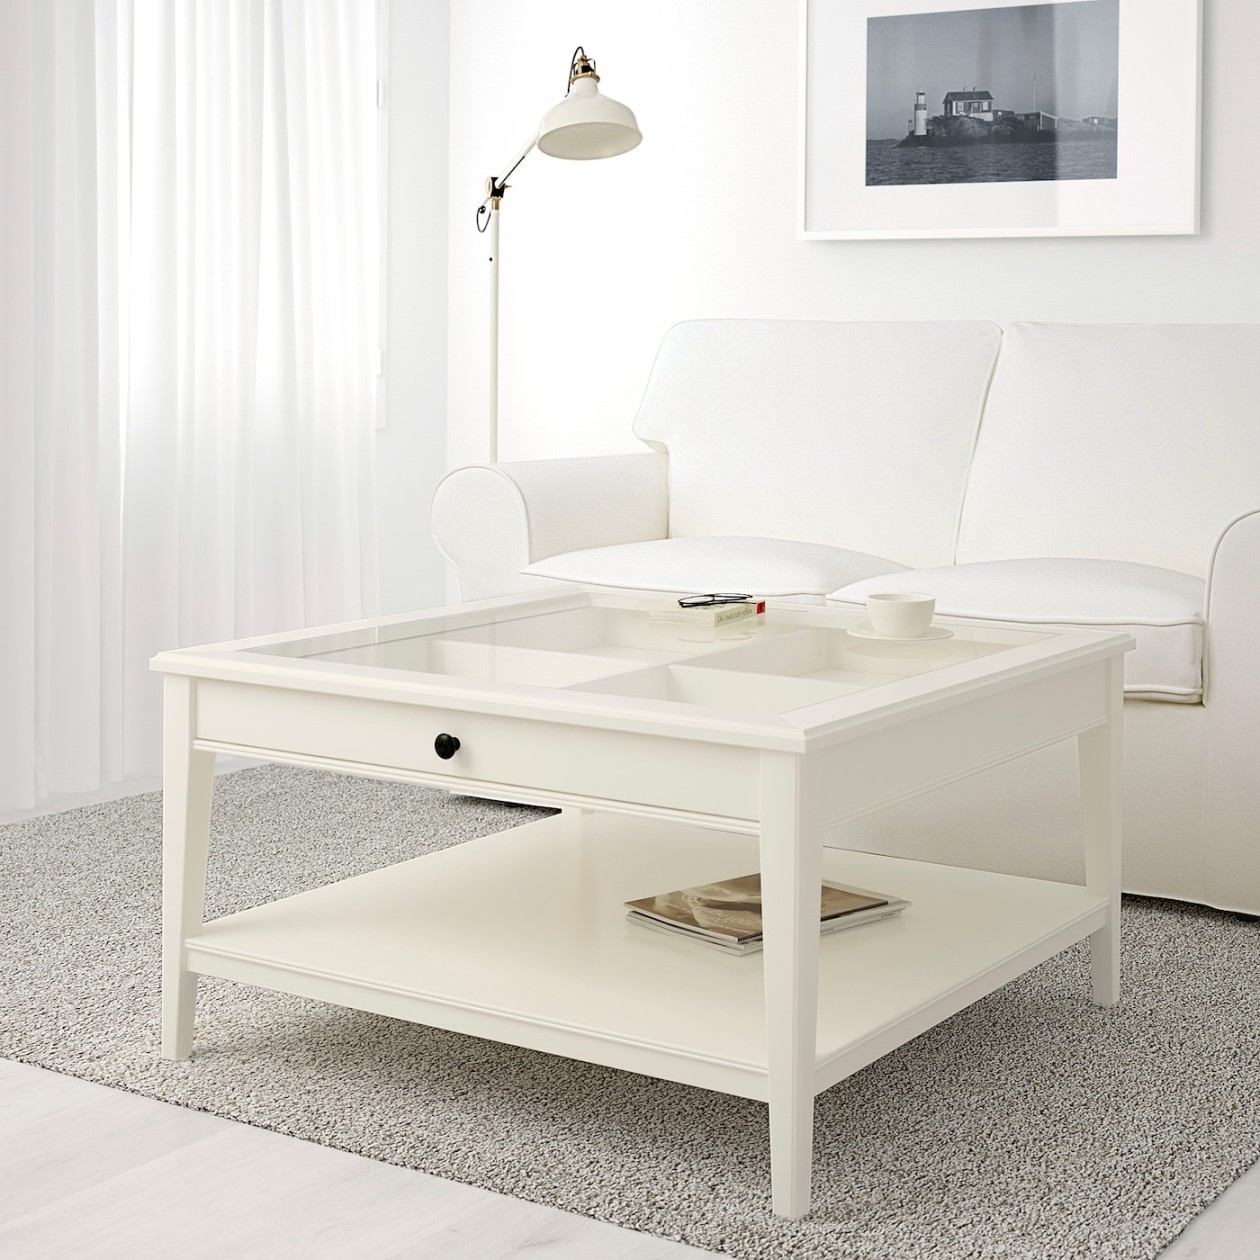 LIATORP Coffee table, white/glass, /x/" - IKEA